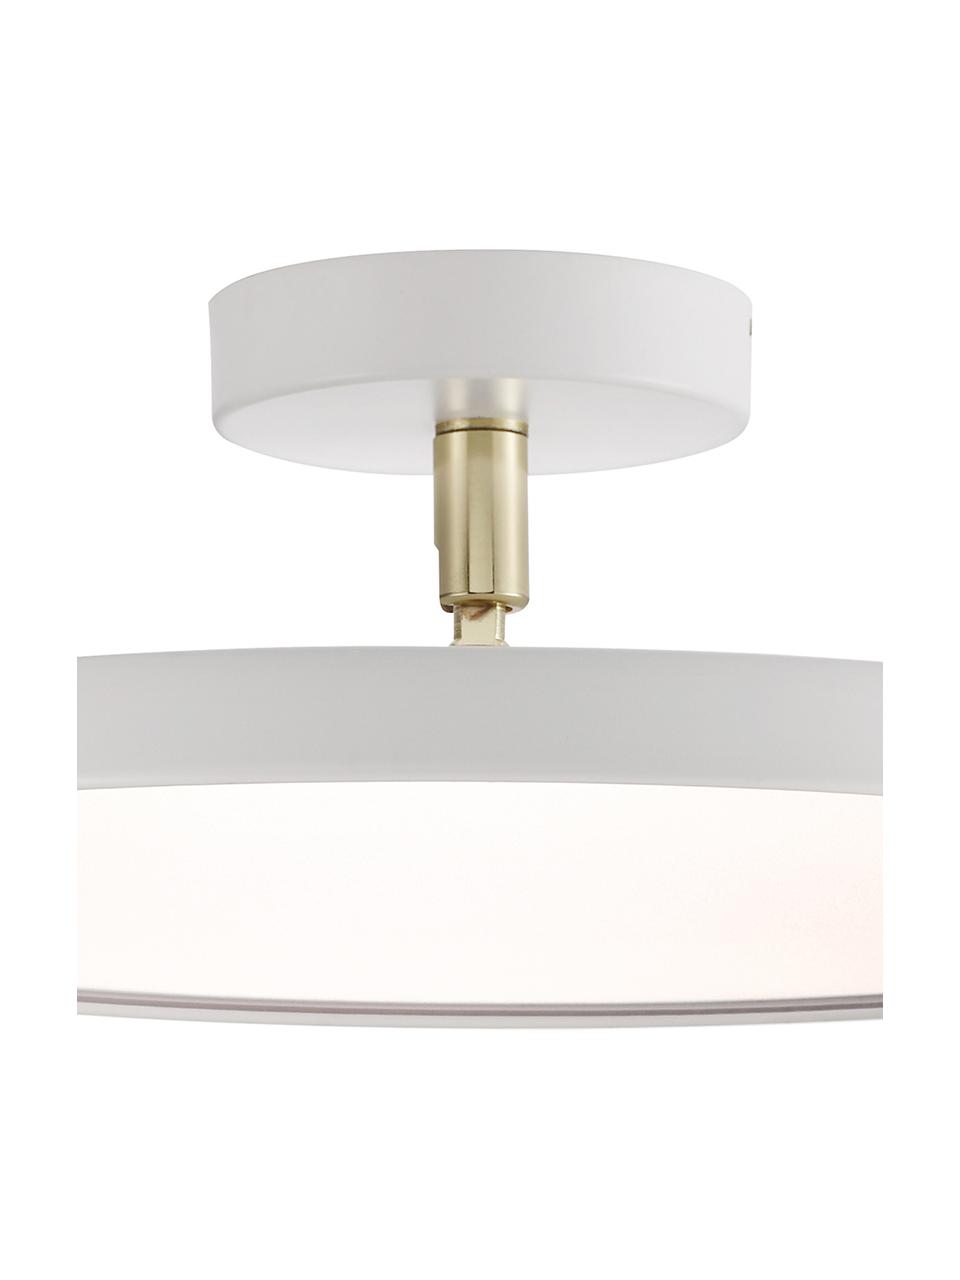 LED plafondlamp Alba in wit, Lampenkap: aluminium, Diffuser: acrylglas, Wit, Ø 40 x H 12 cm